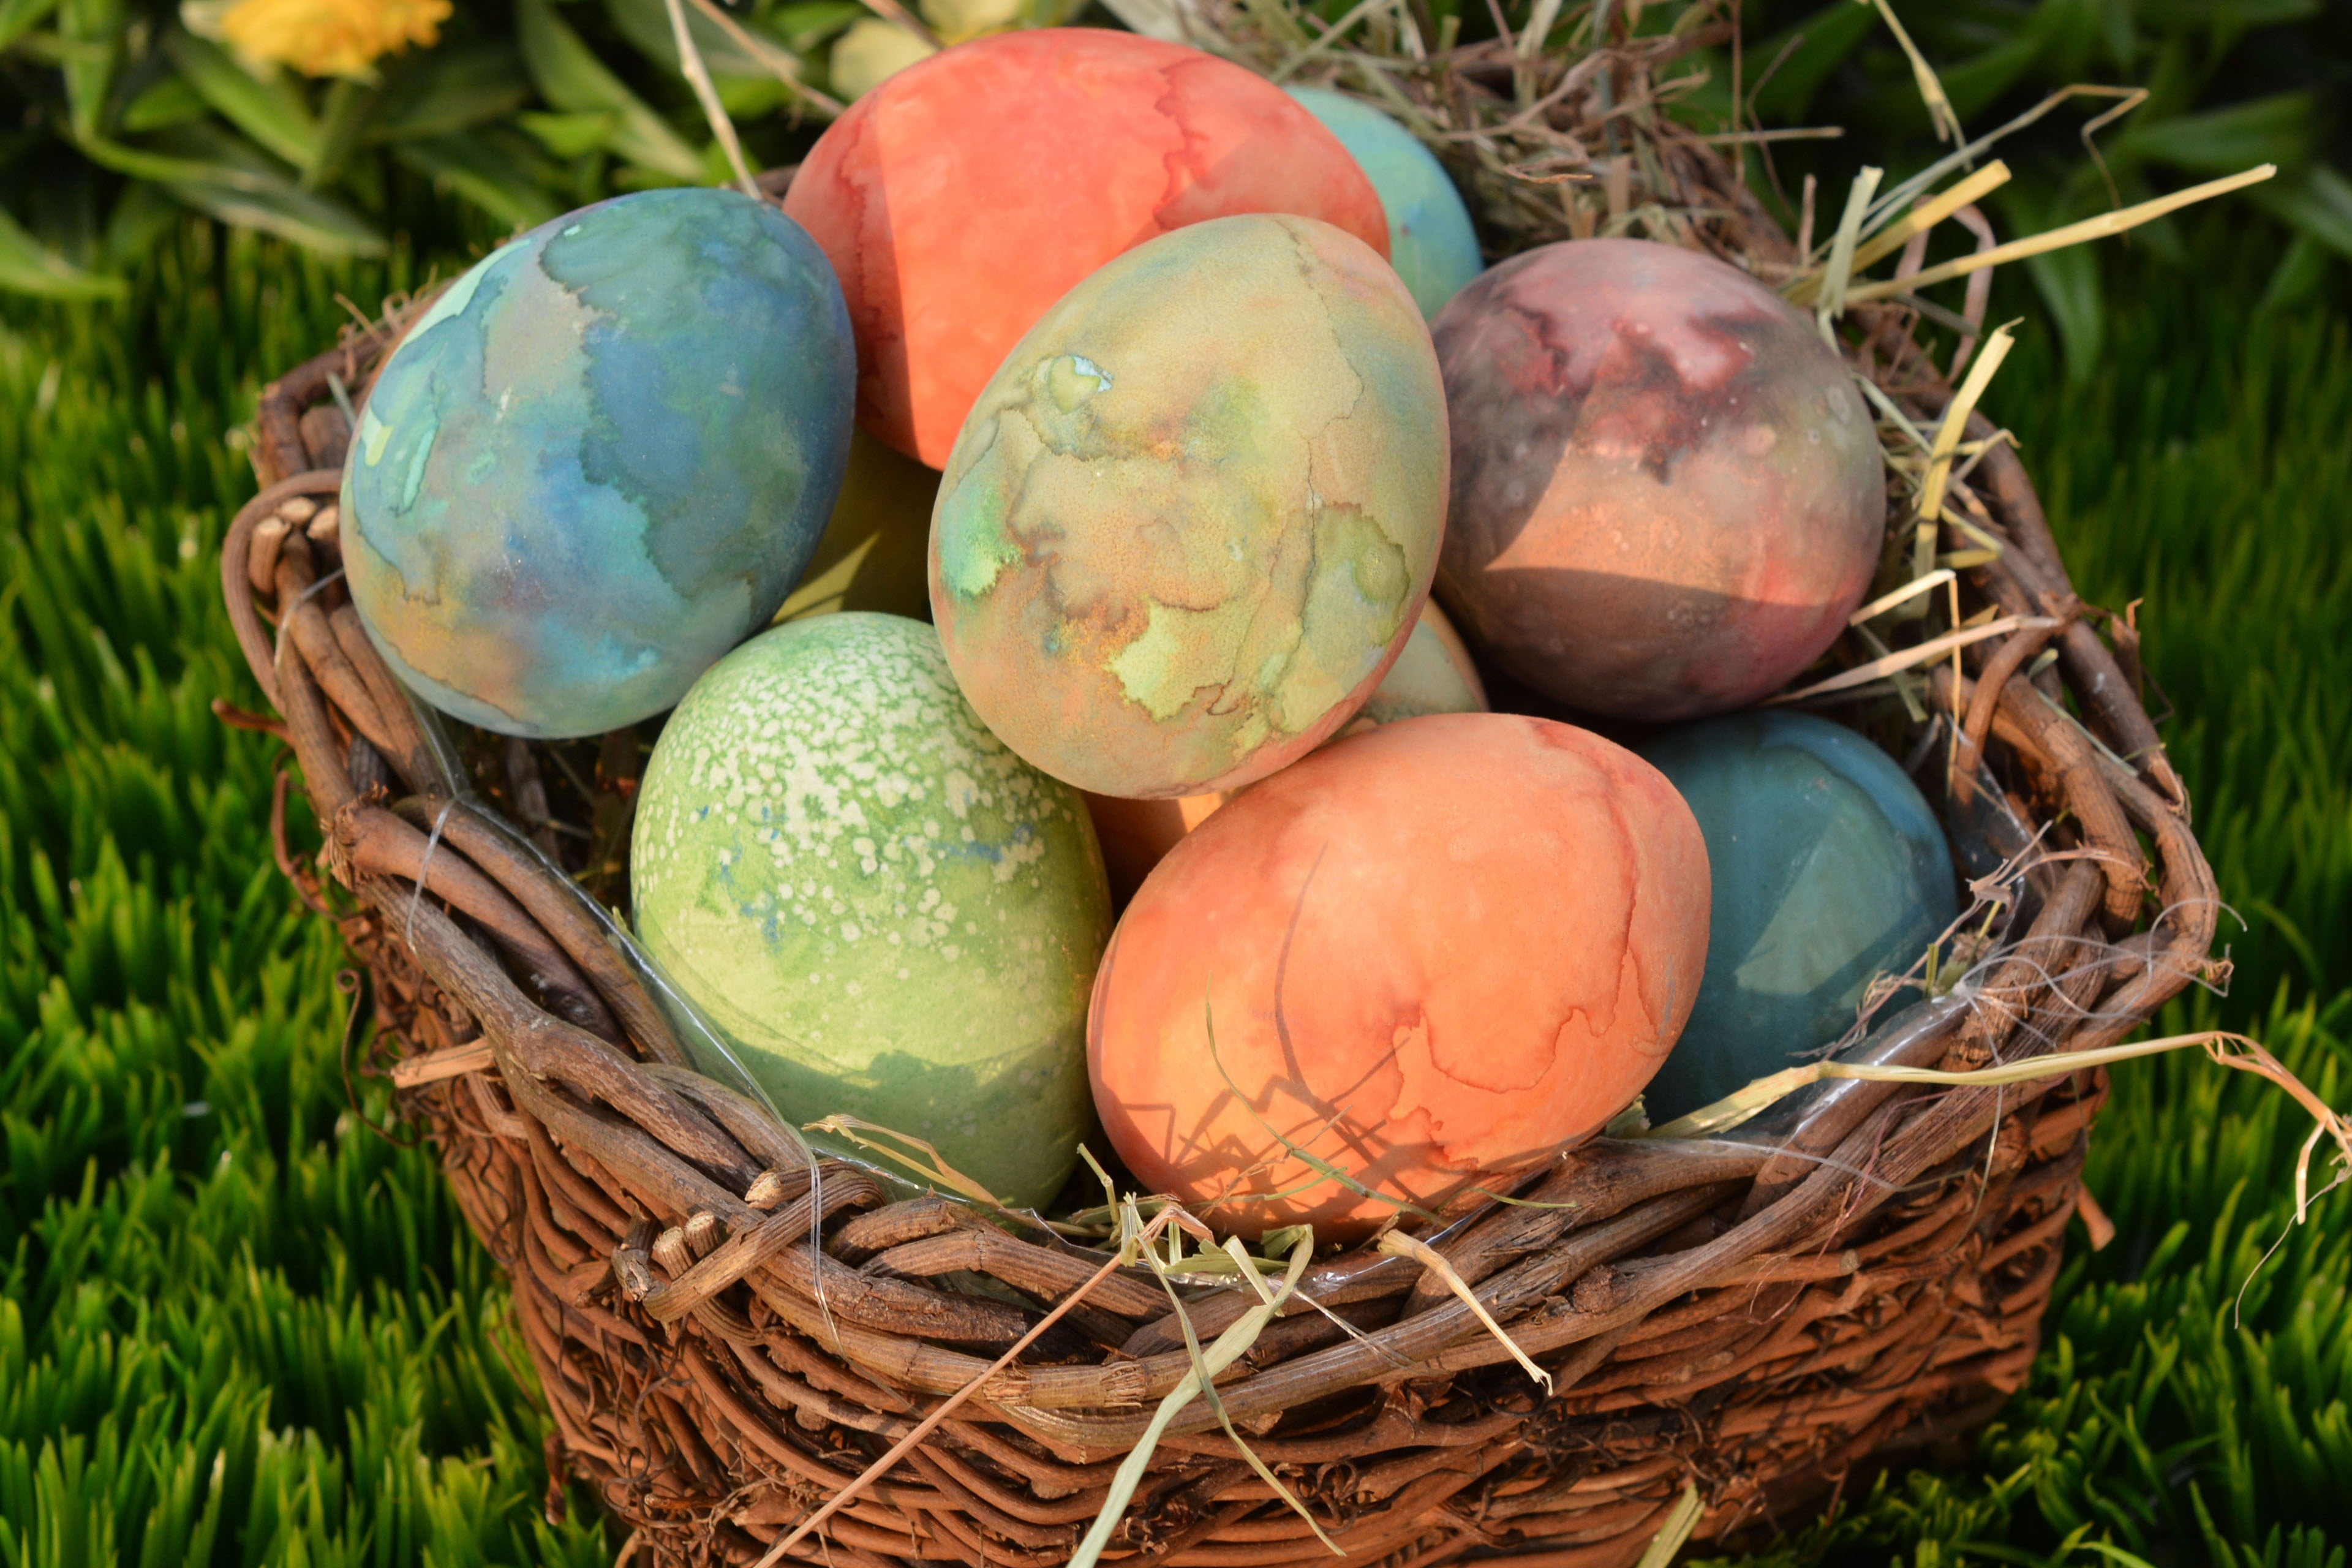 Easter eggs in brown wicker basket